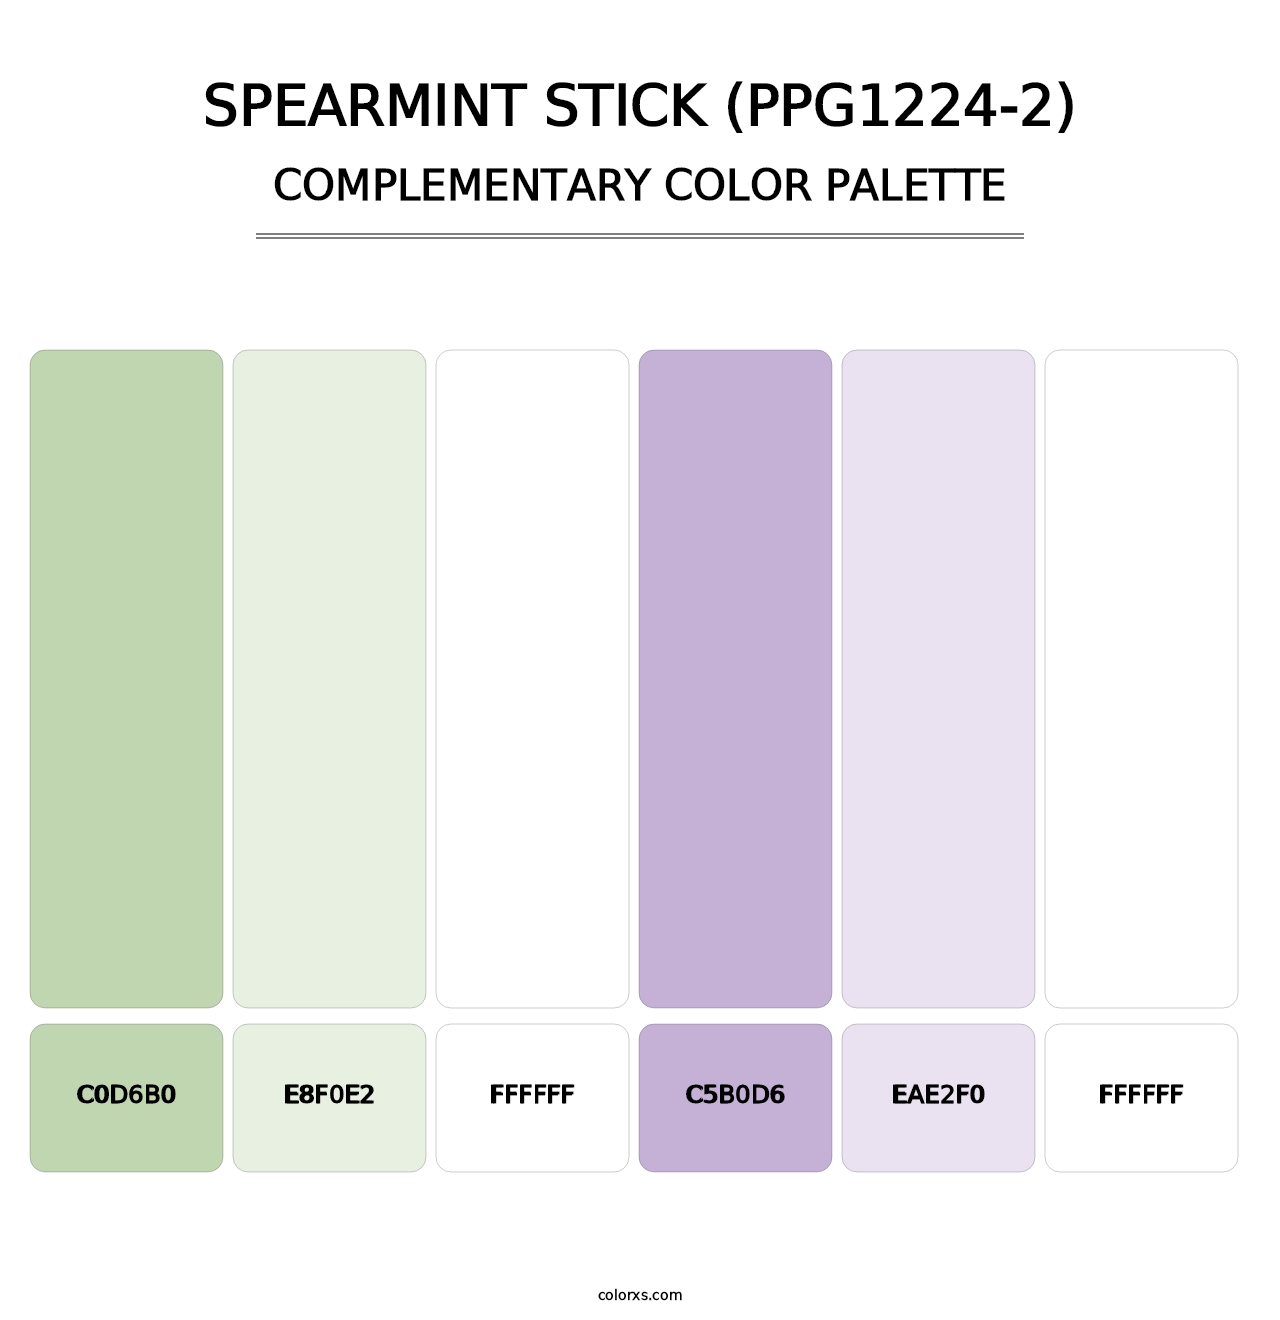 Spearmint Stick (PPG1224-2) - Complementary Color Palette